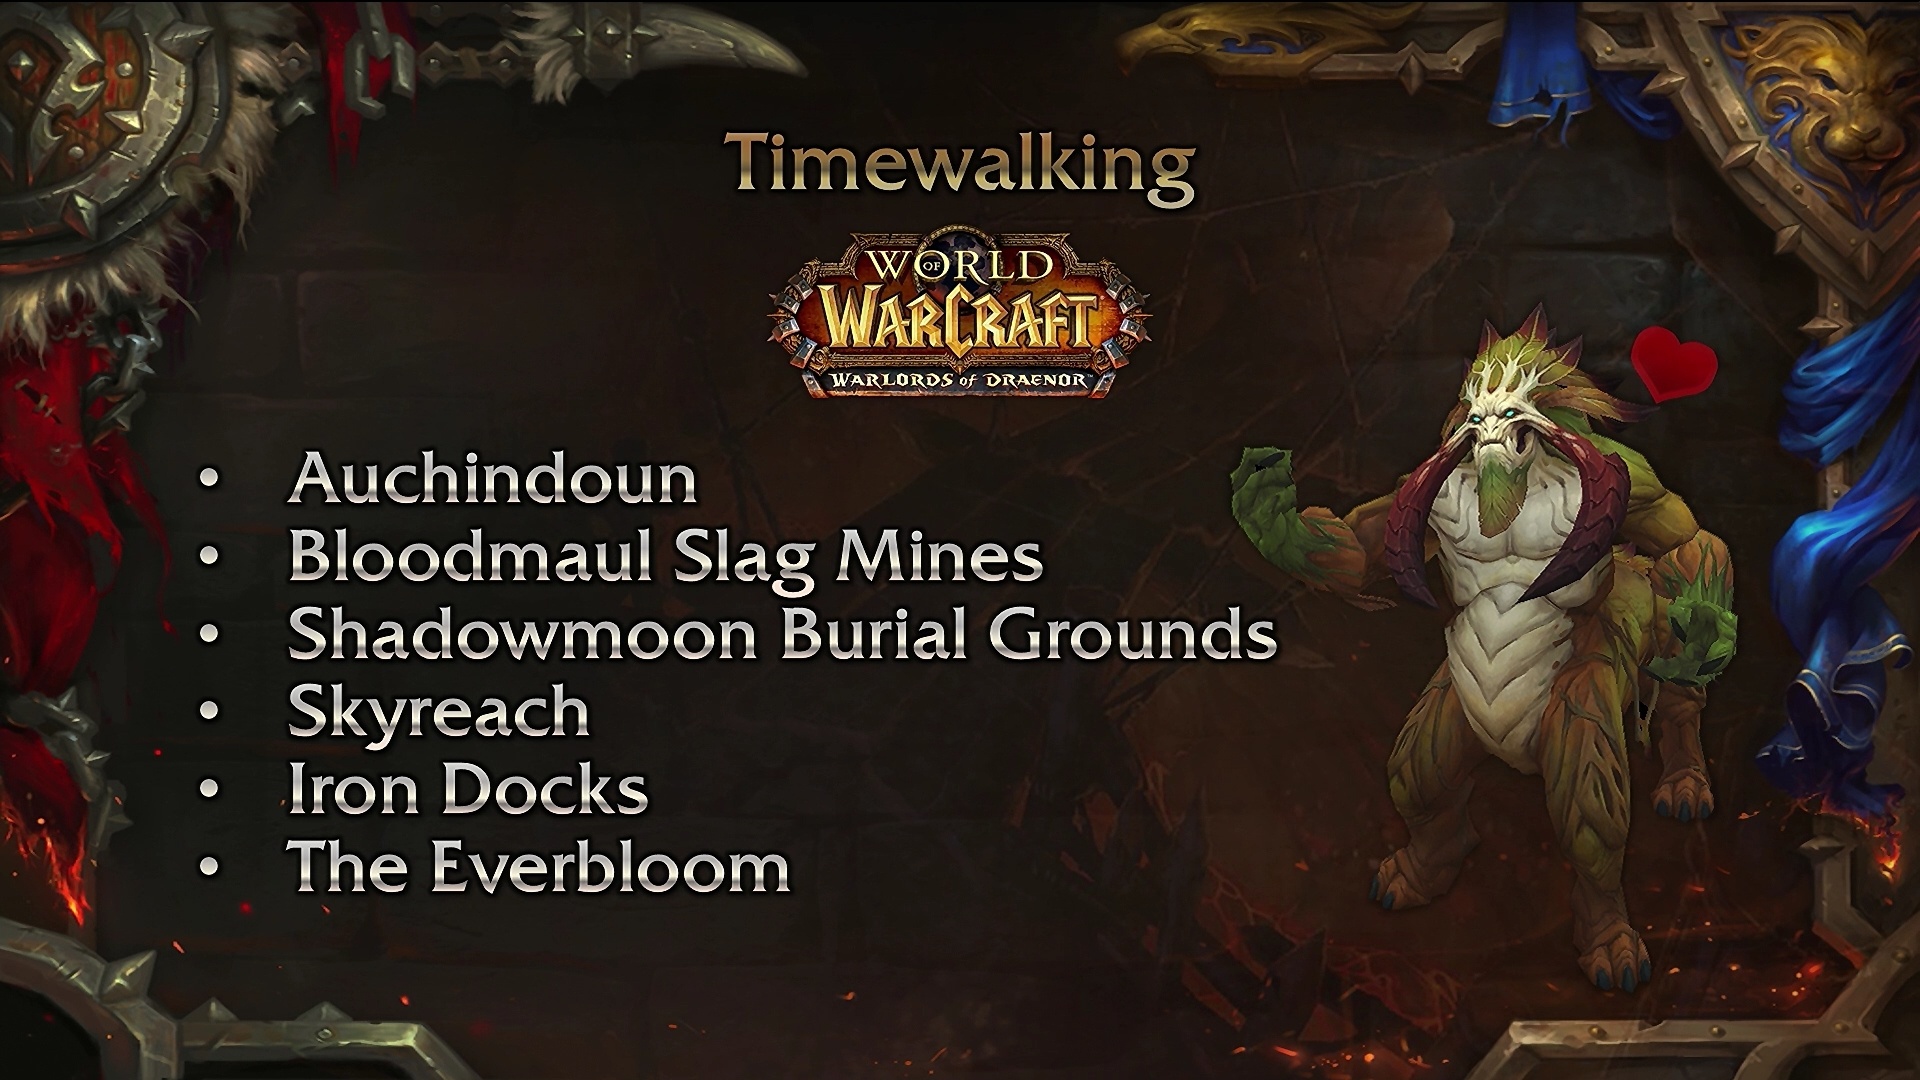 Warlords of Draenor Timewalking.